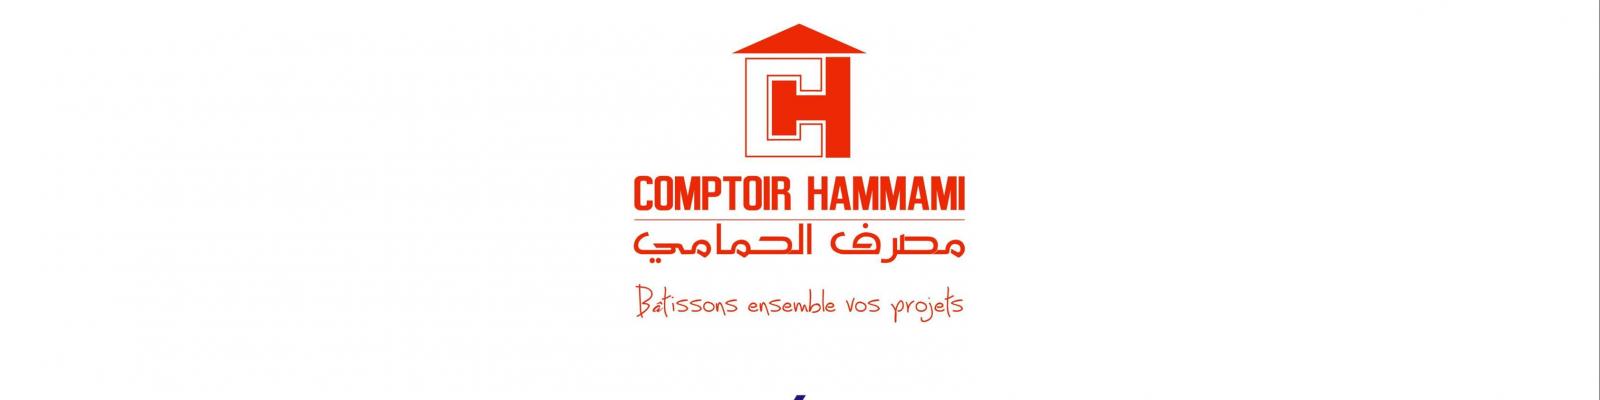 Tube pvc - Comptoir Hammami